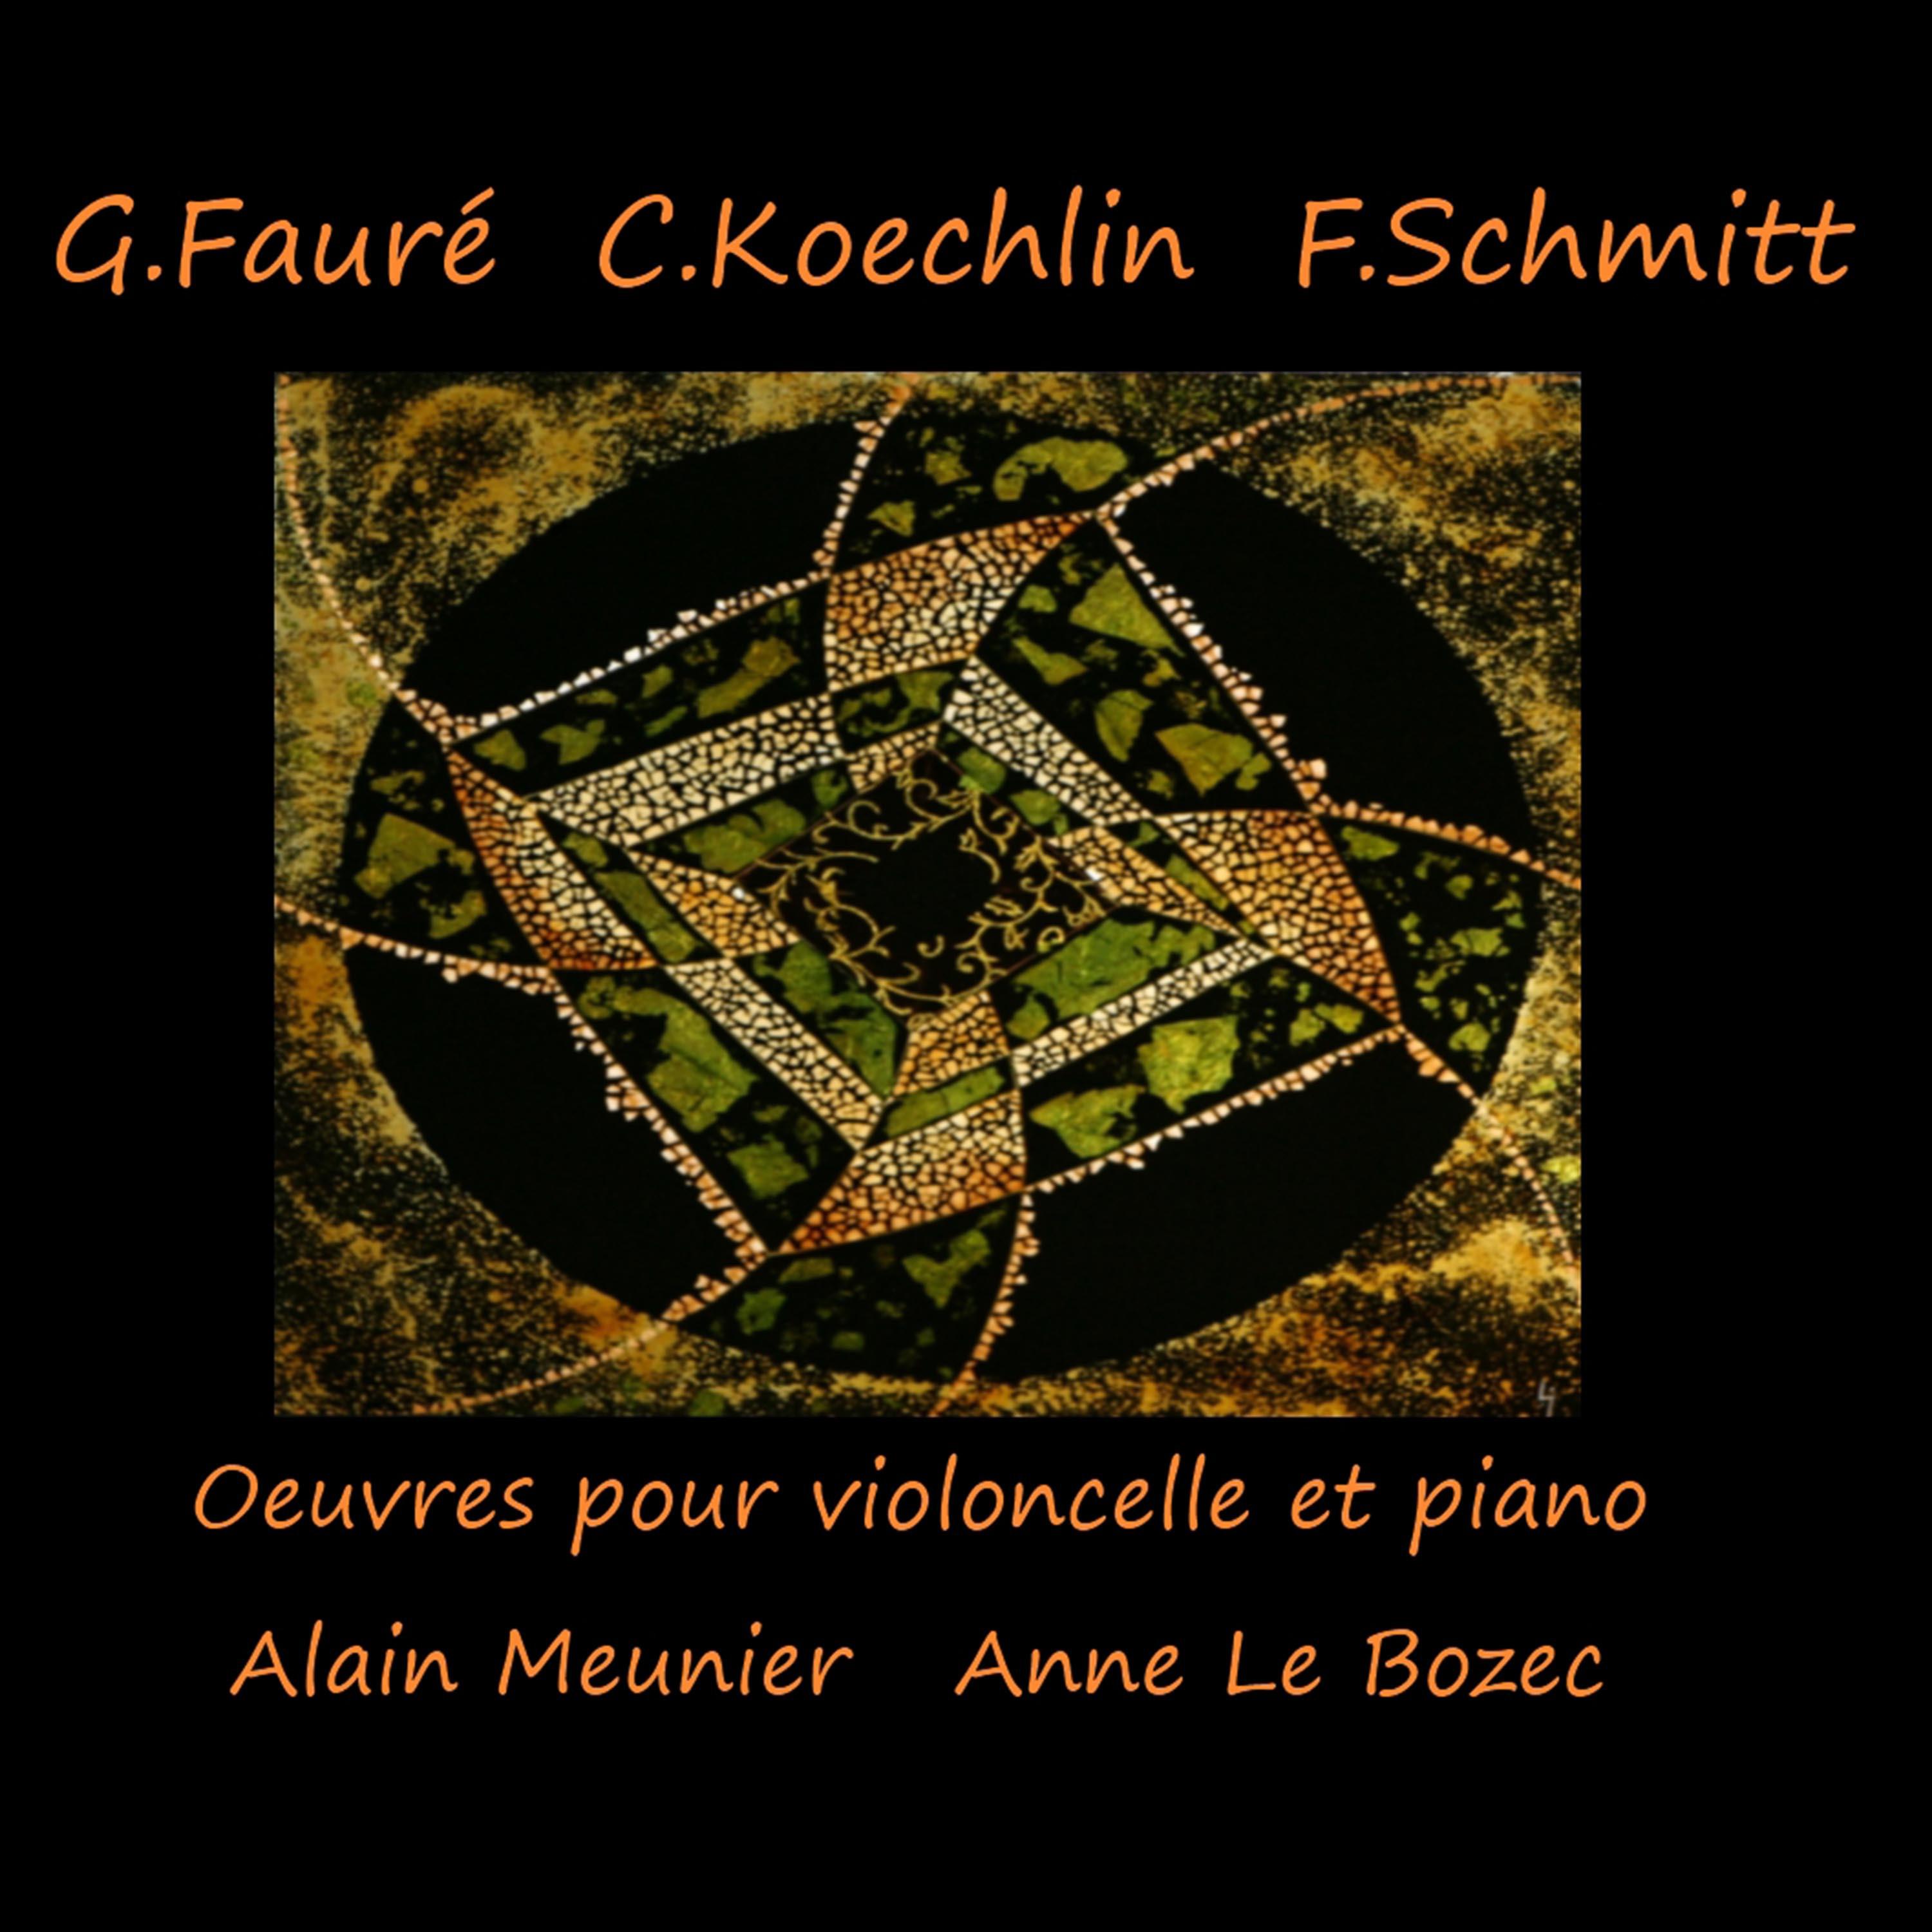 Sonate pour violoncelle et piano No. 2 en Sol Mineur, Op. 117: III. Allegro vivo